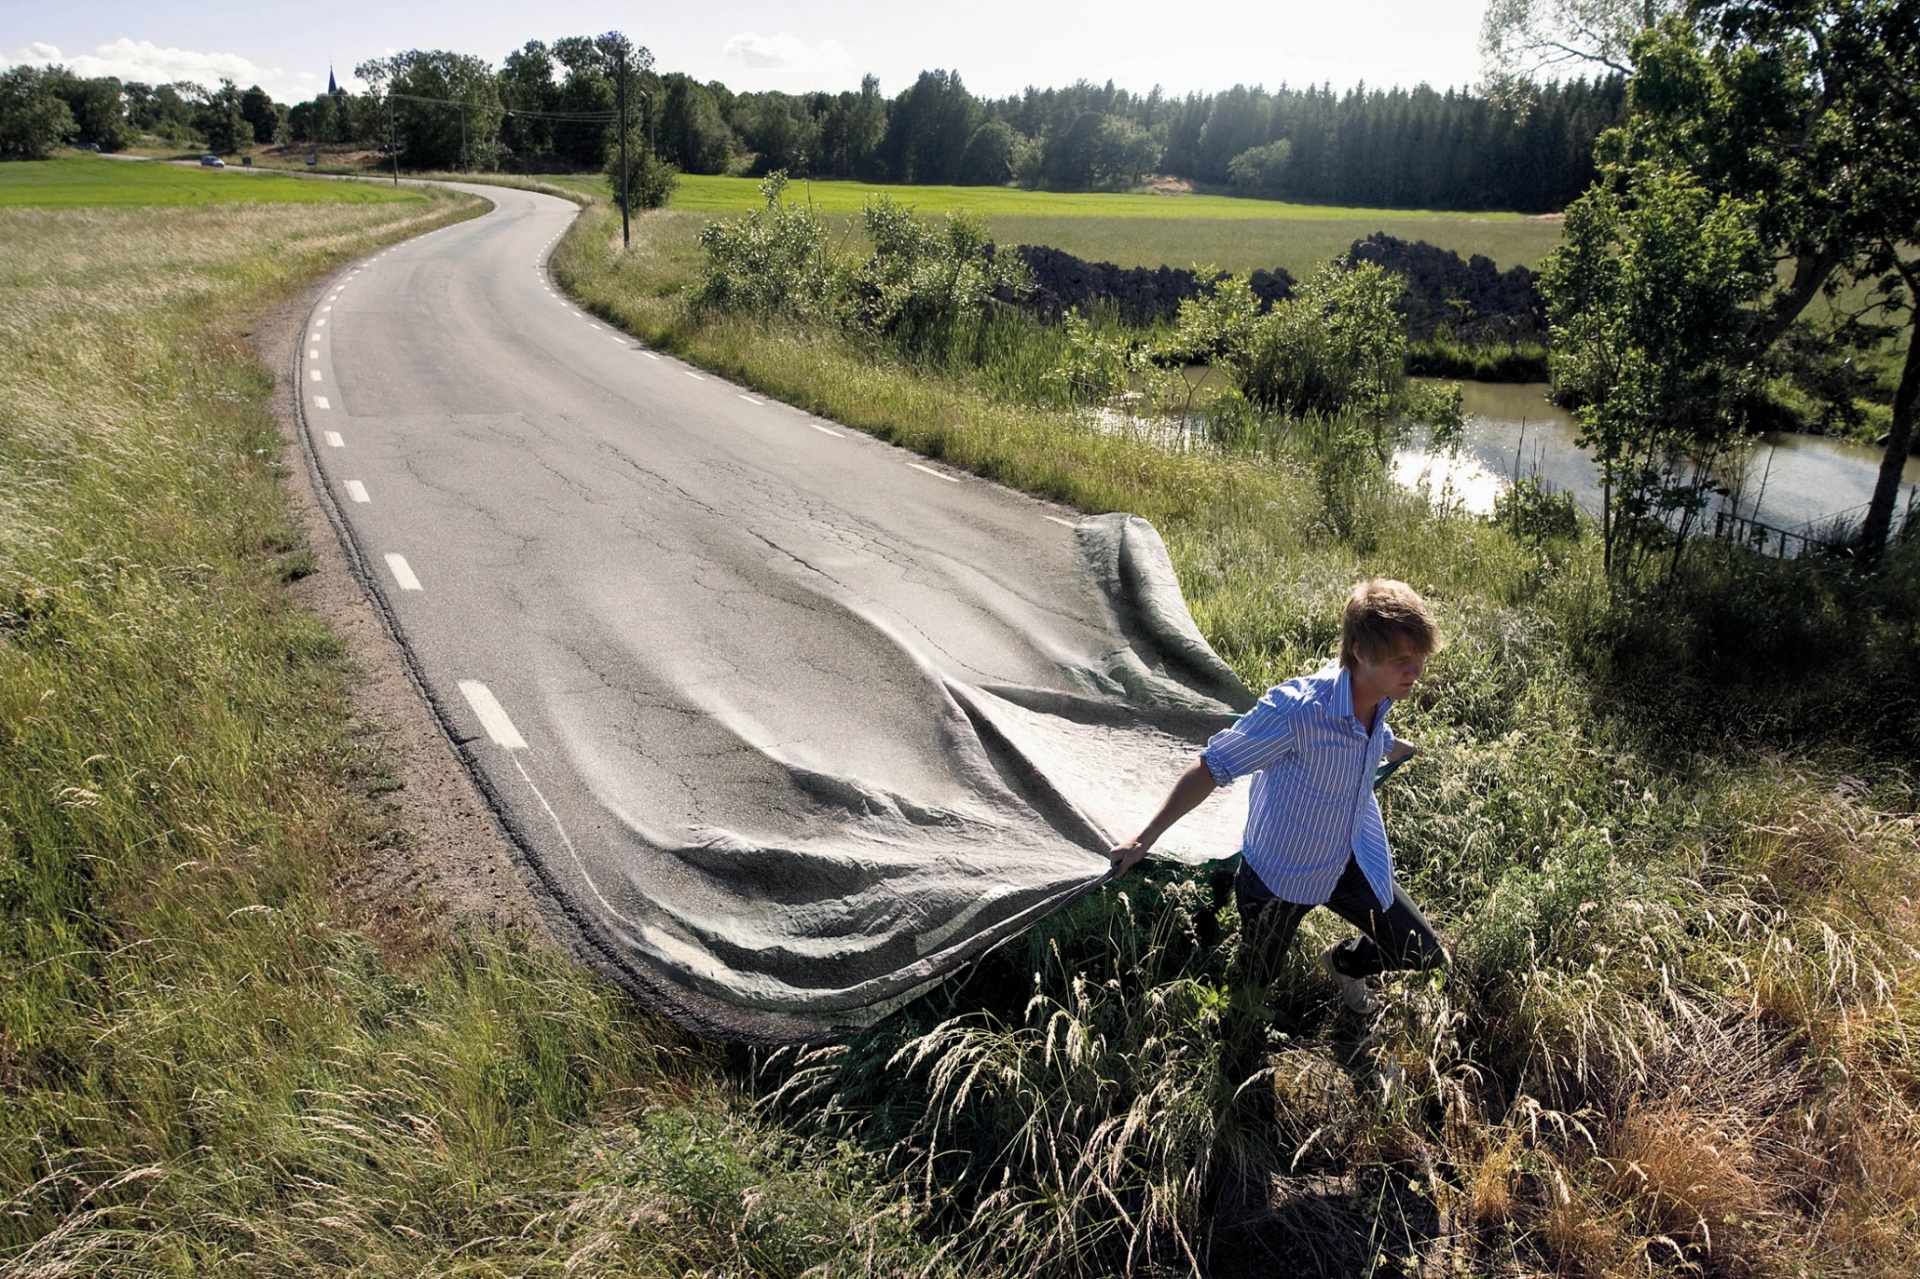 go-your-own-road-by-erik-johansson